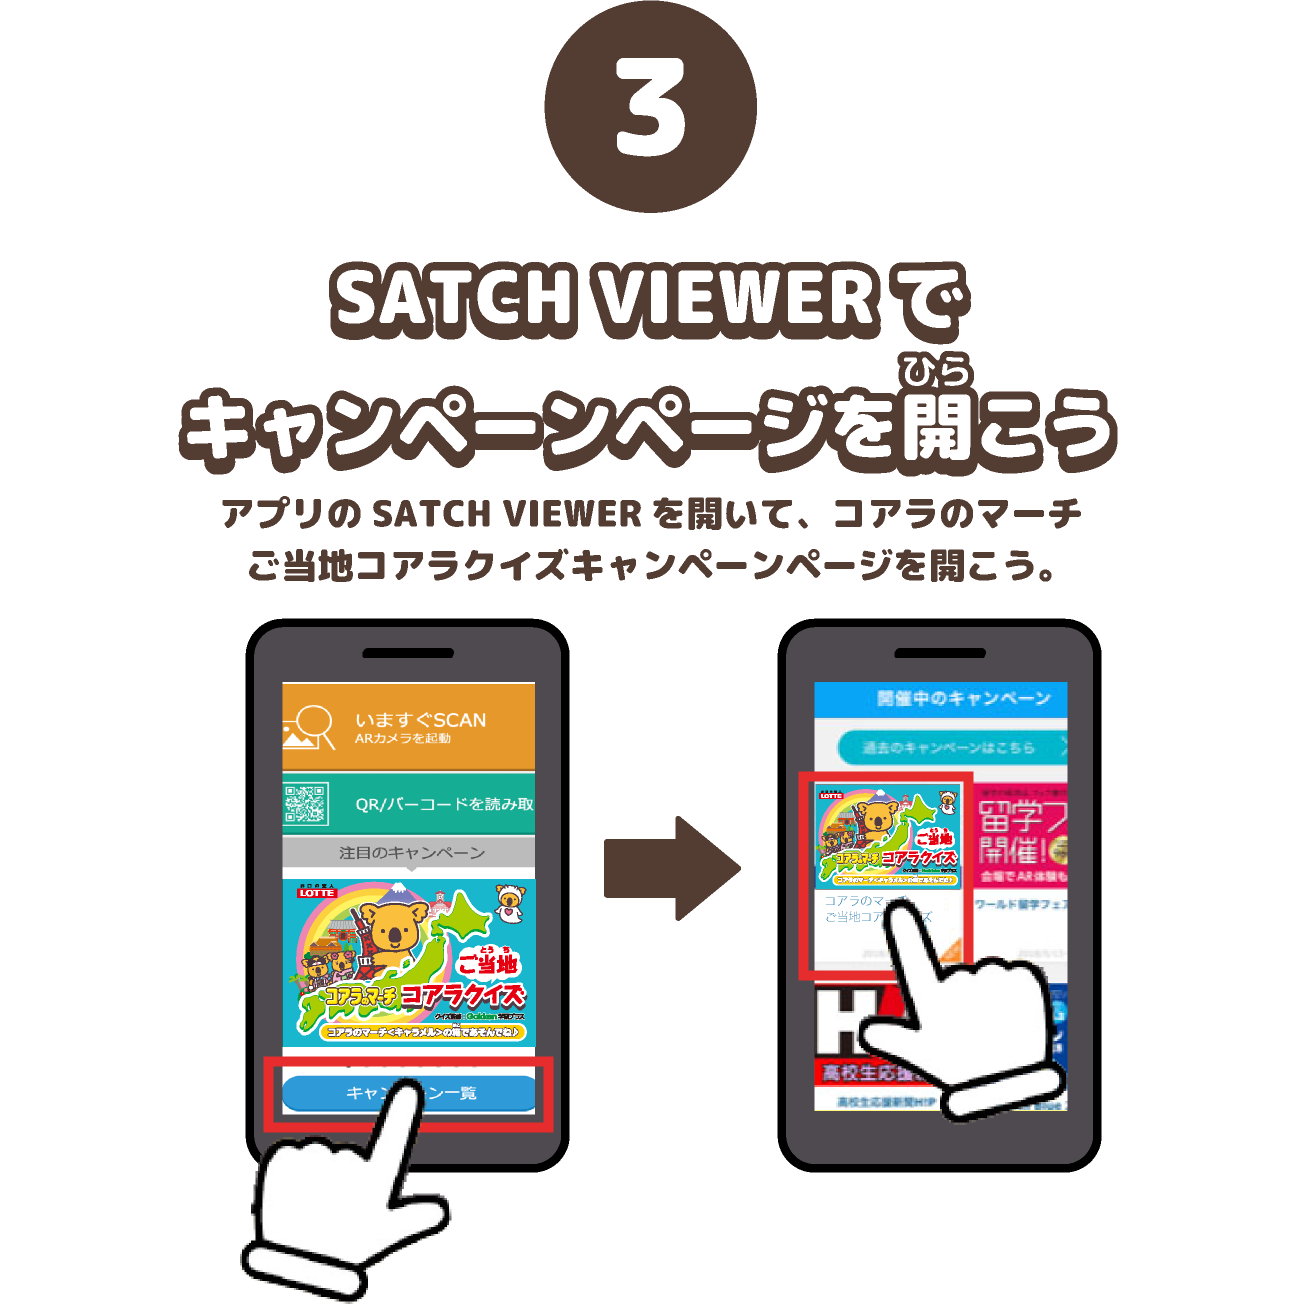 SATCH VIEWERで キャンペーンページを開こう。アプリのSATCH VIEWERを開いて、ご当地コアラの マーチコアラクイズキャンペーンページを開こう。